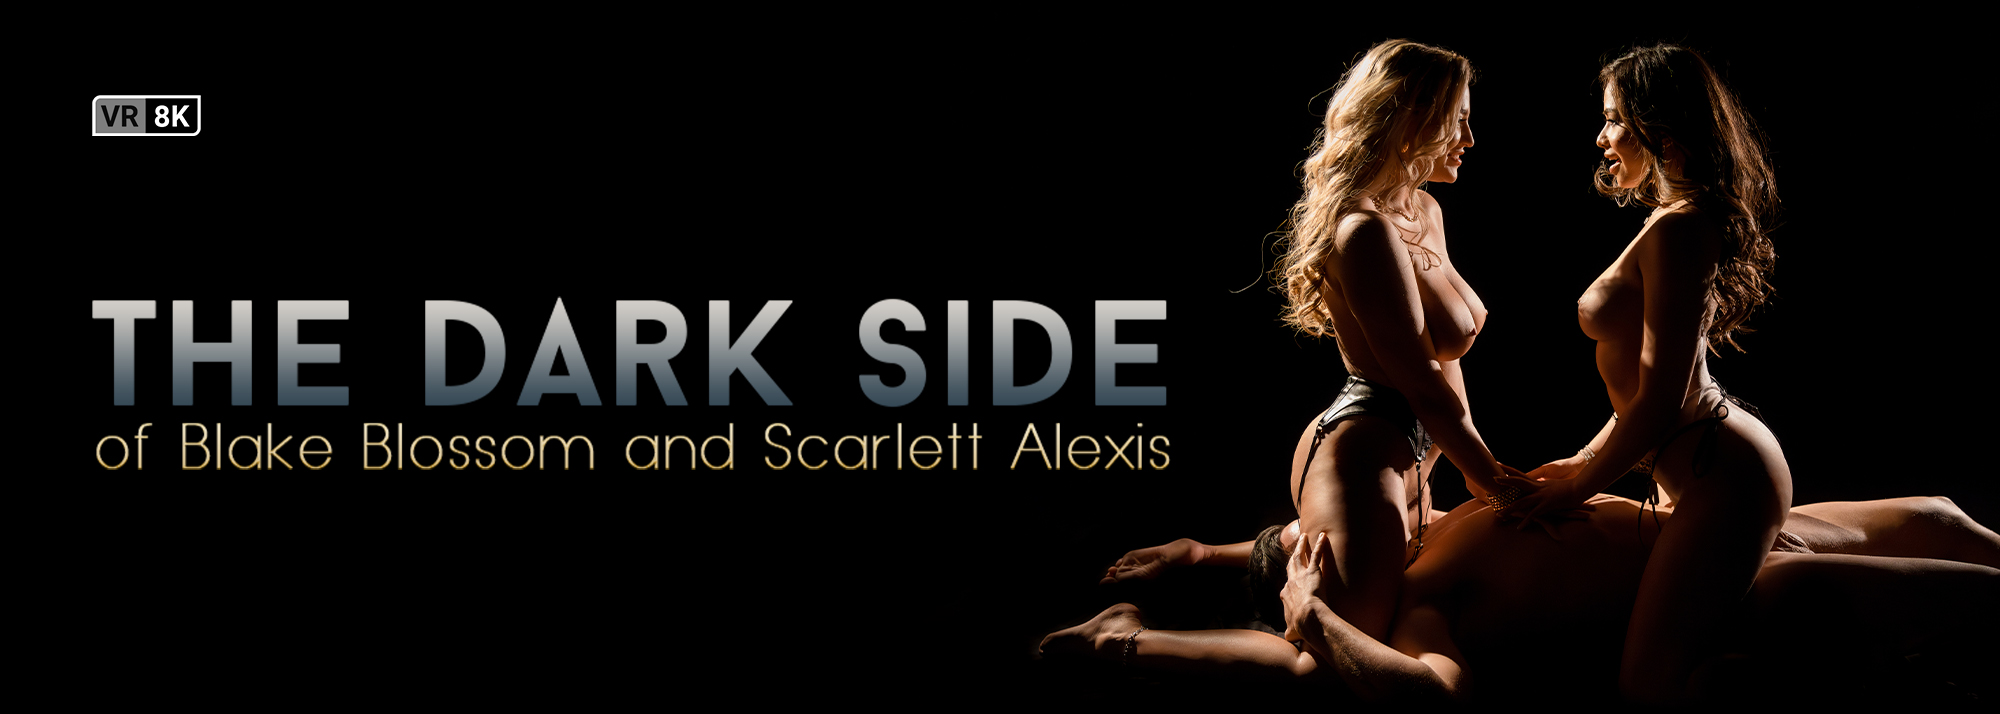 The Dark Side of Blake Blossom and Scarlett Alexis VR Porn Video: 8K, 4K, Full HD and 180/360 POV |  Slideshow